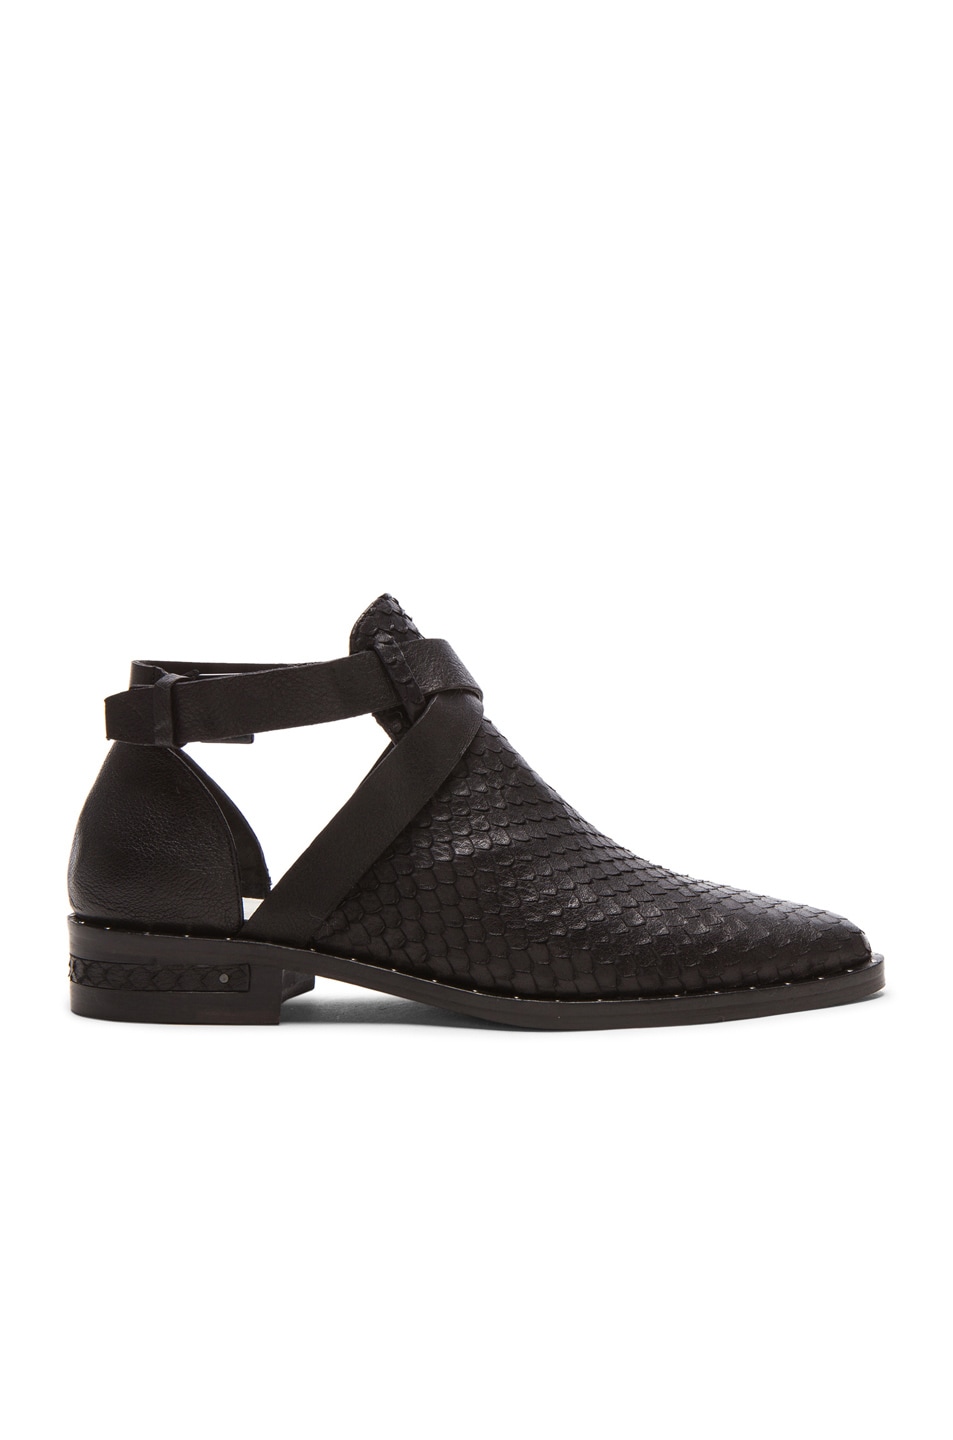 Image 1 of Freda Salvador Spark Calfskin Leather Boots in Black Fish